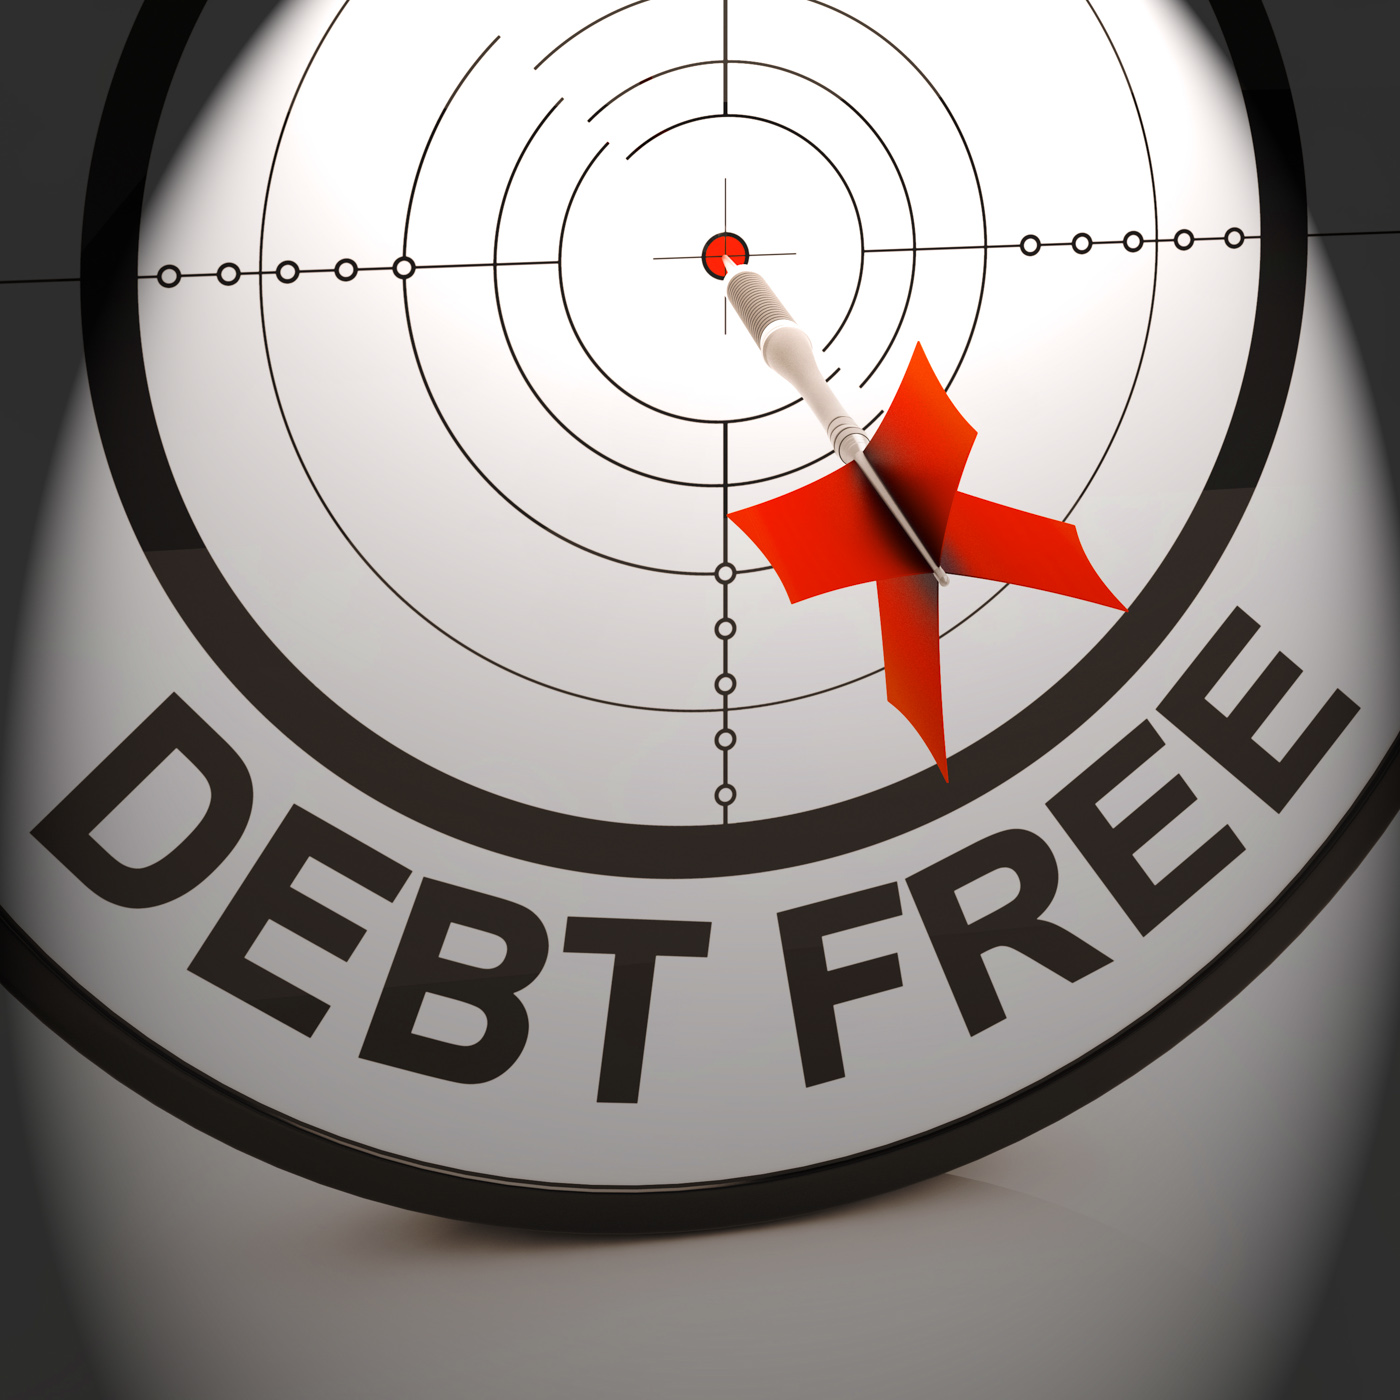 Debt Free Shows Cash And Credit Freedom, Cash, Credit, Debt, Economic, HQ Photo